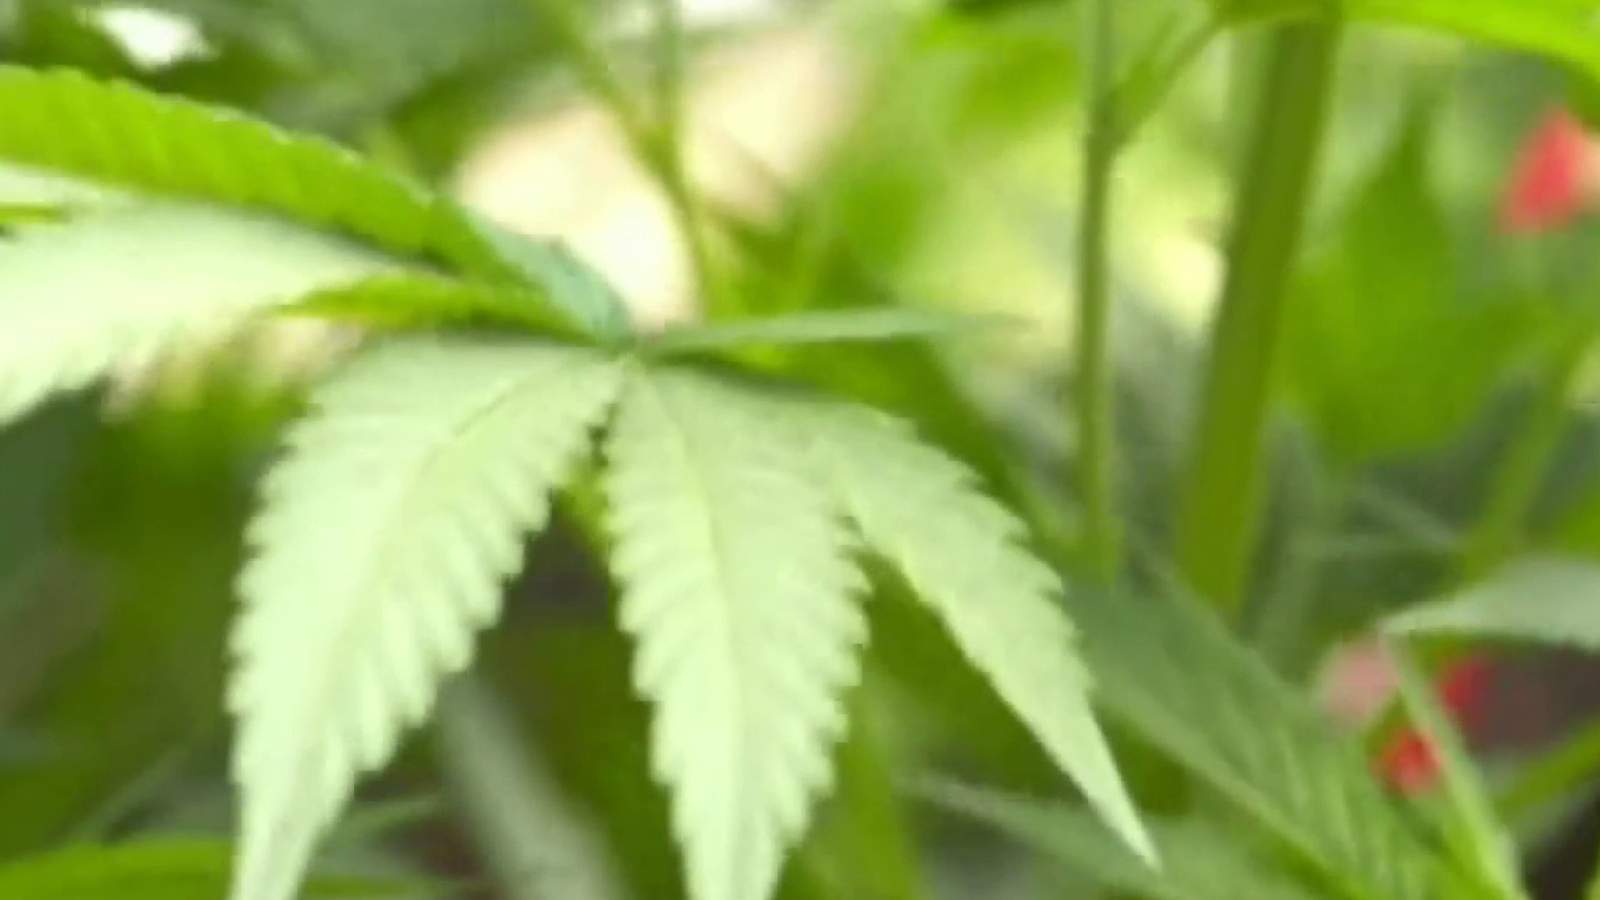 Royal Oak debates where to allow recreational marijuana businesses